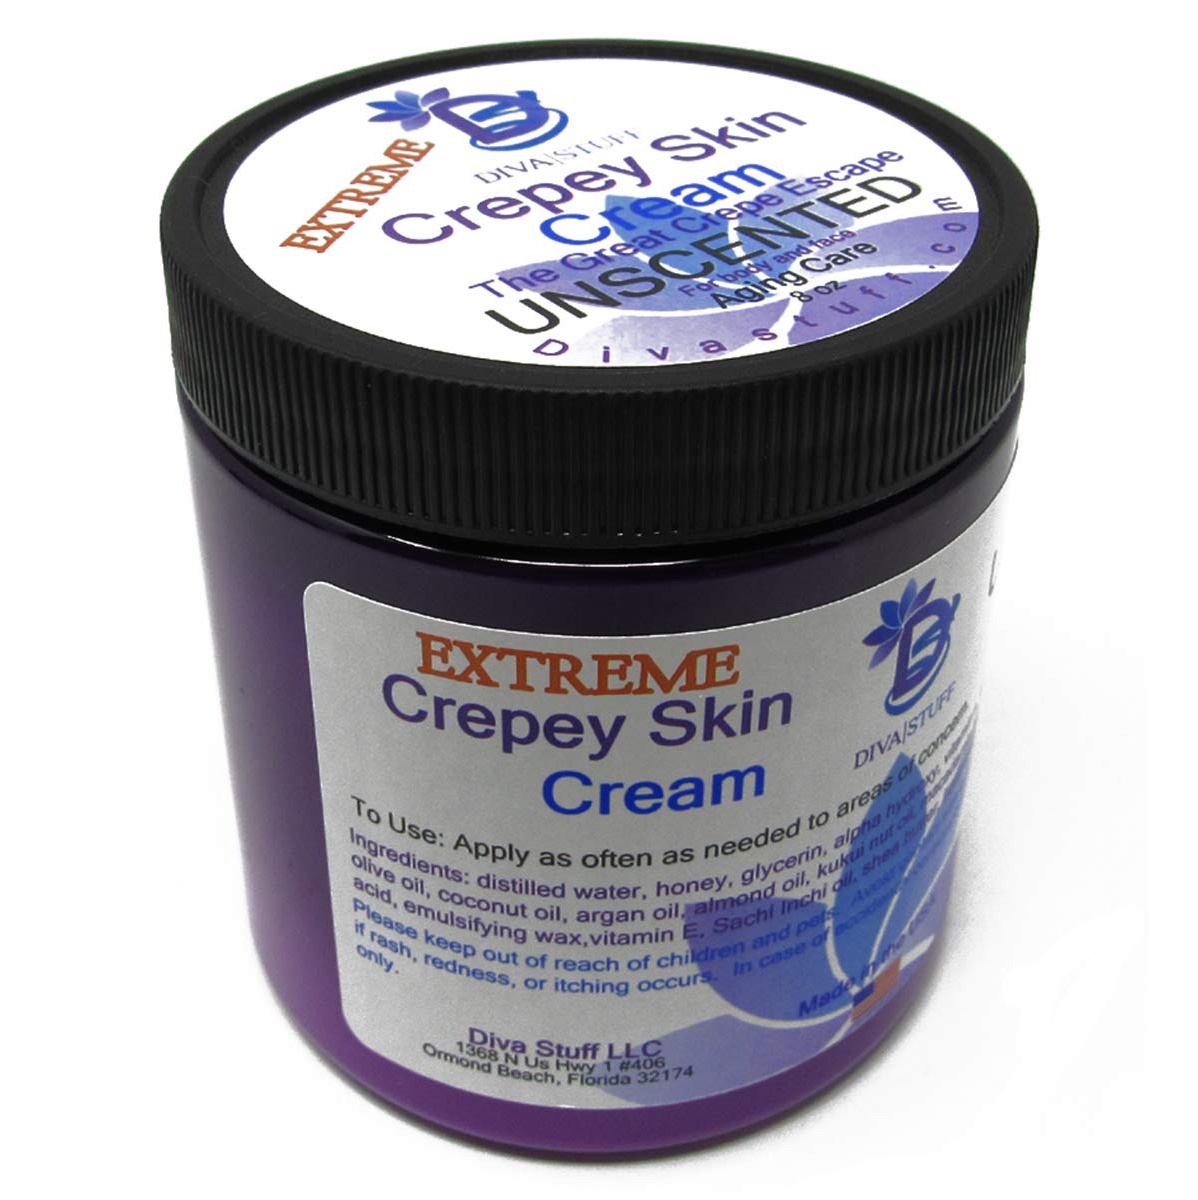 Diva Stuff Extreme Creepy Skin Cream